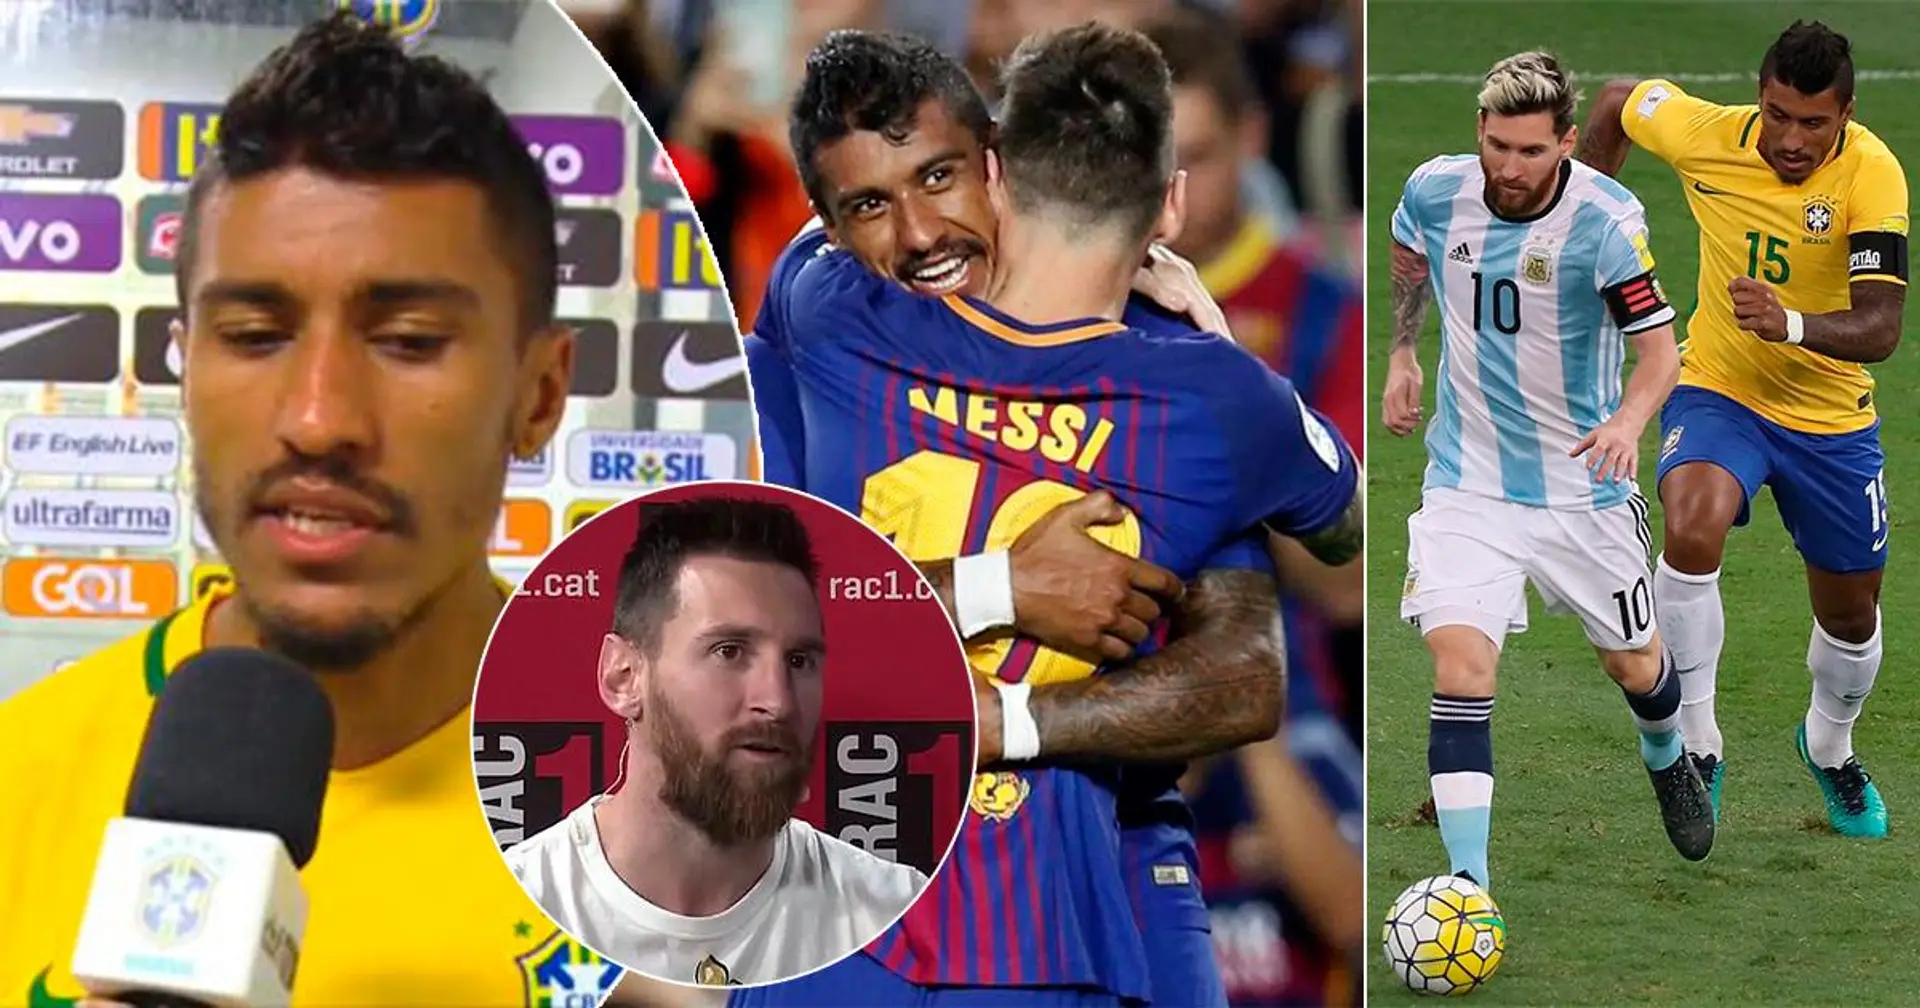 'Casi me caigo de culo': Cómo Messi convenció a Paulinho para venir al Barça